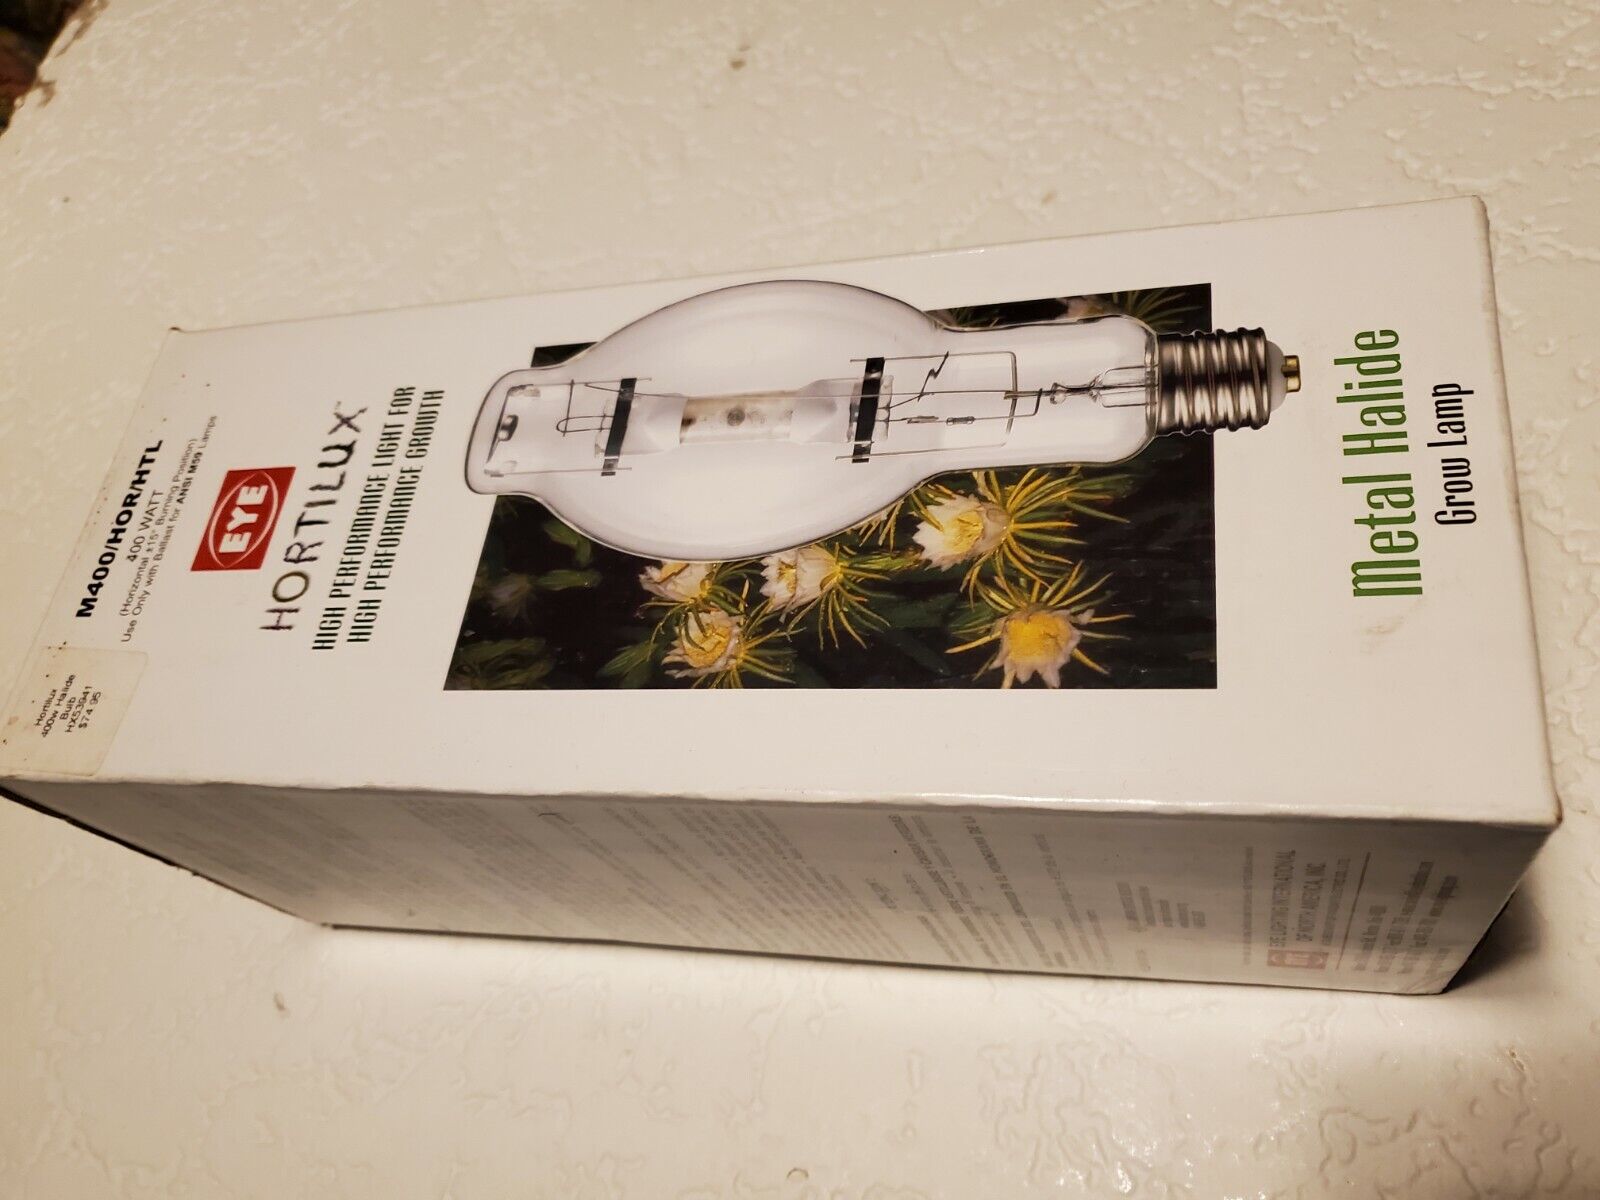 Hortilux MH 400w MH Metal Halide Grow Light Lamp Bulb